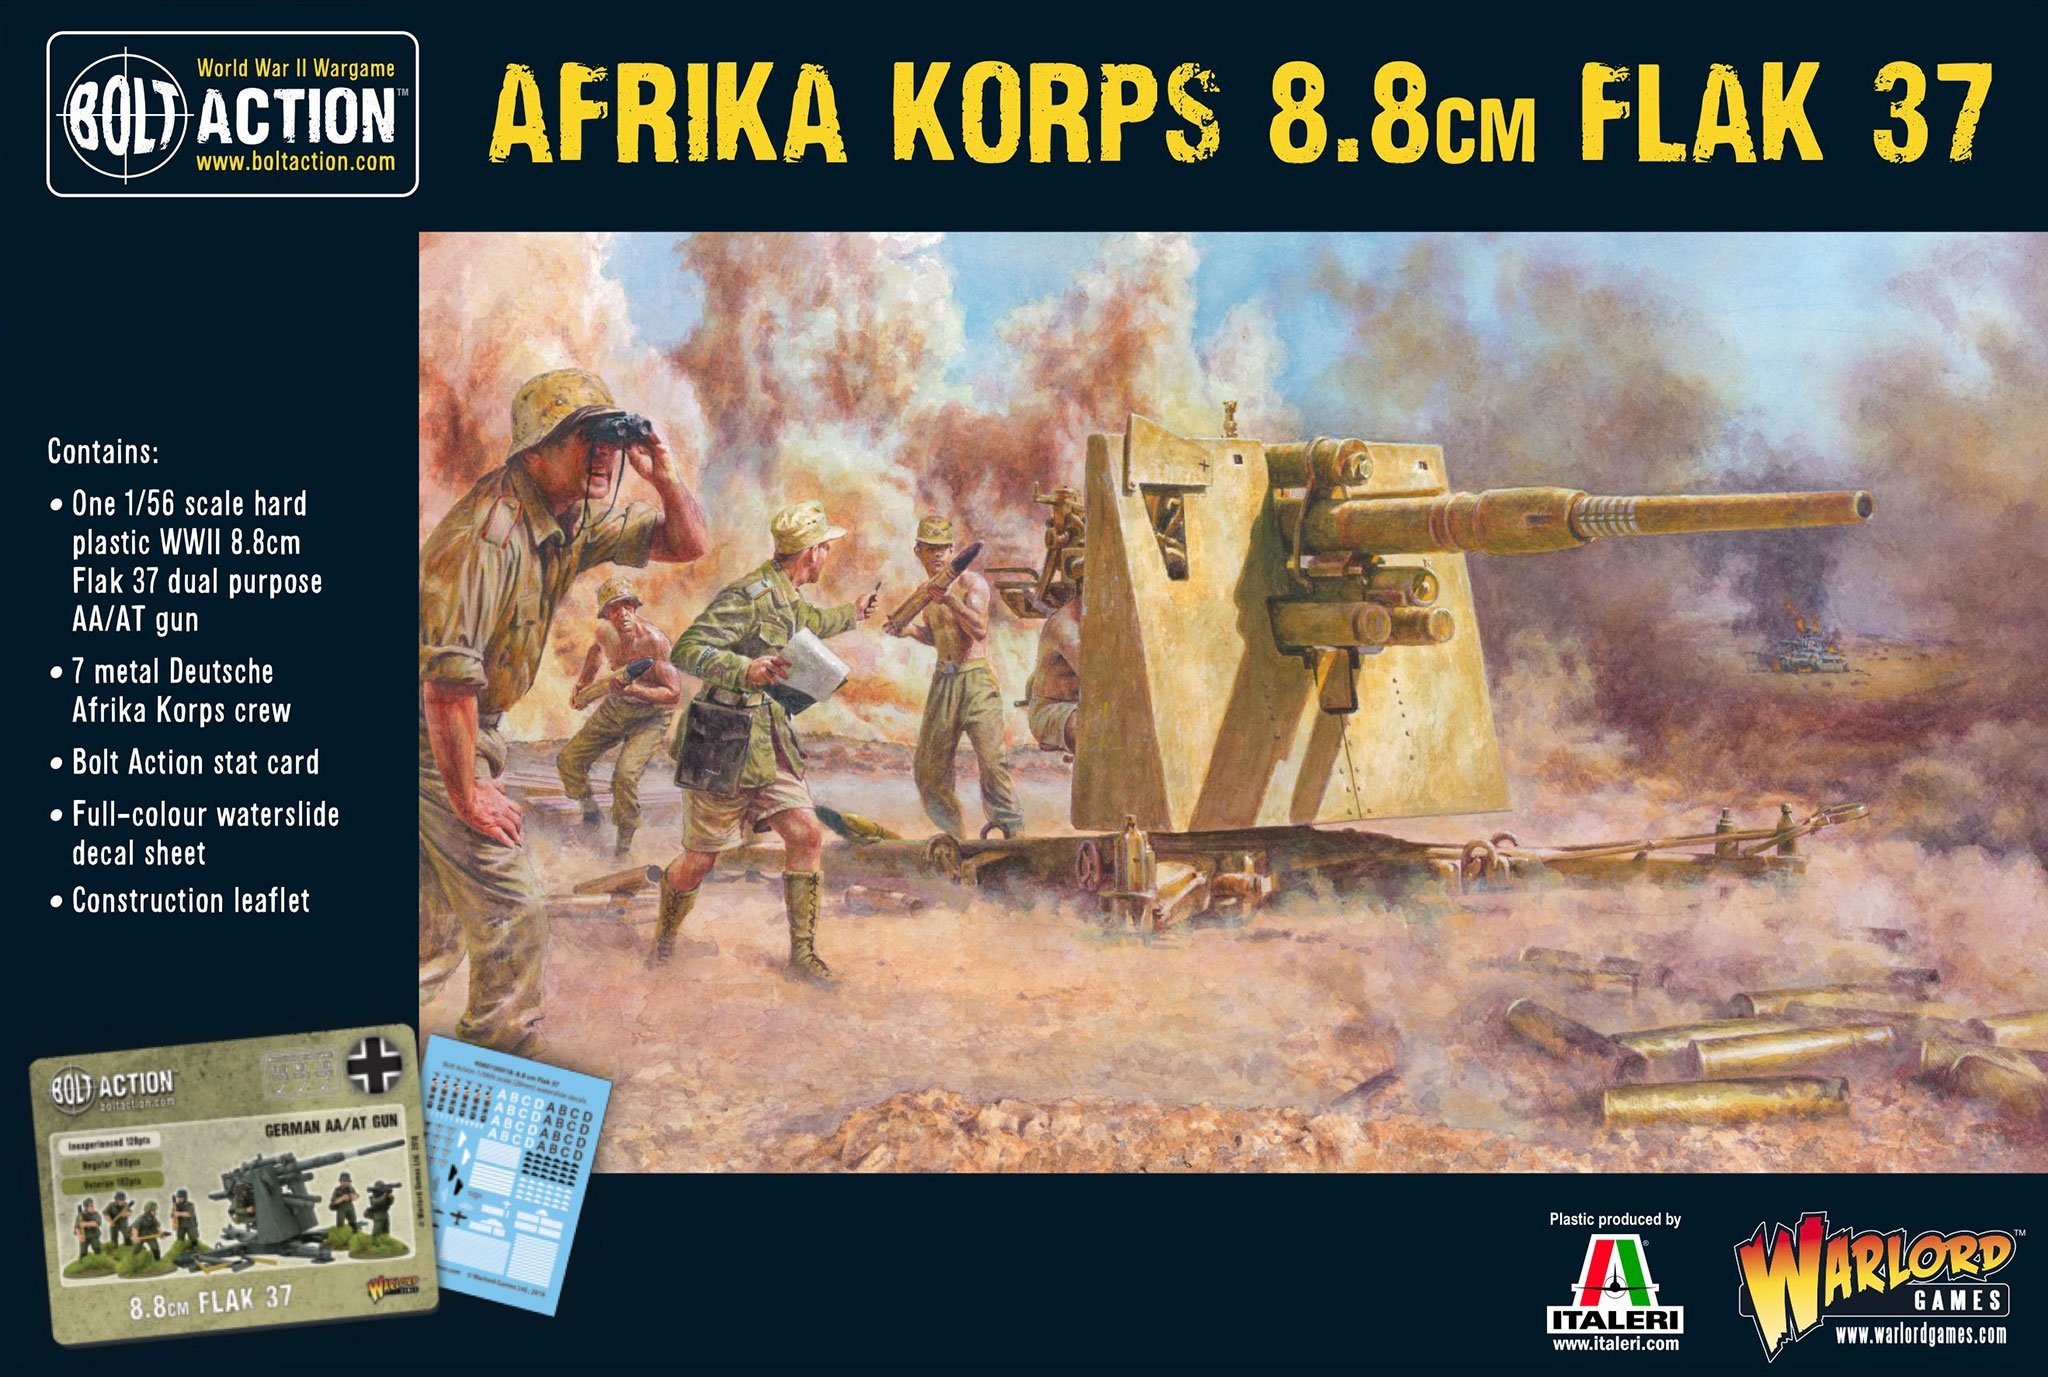 Bolt Action: German: Afrika Korps 8.8cm Flak 37 